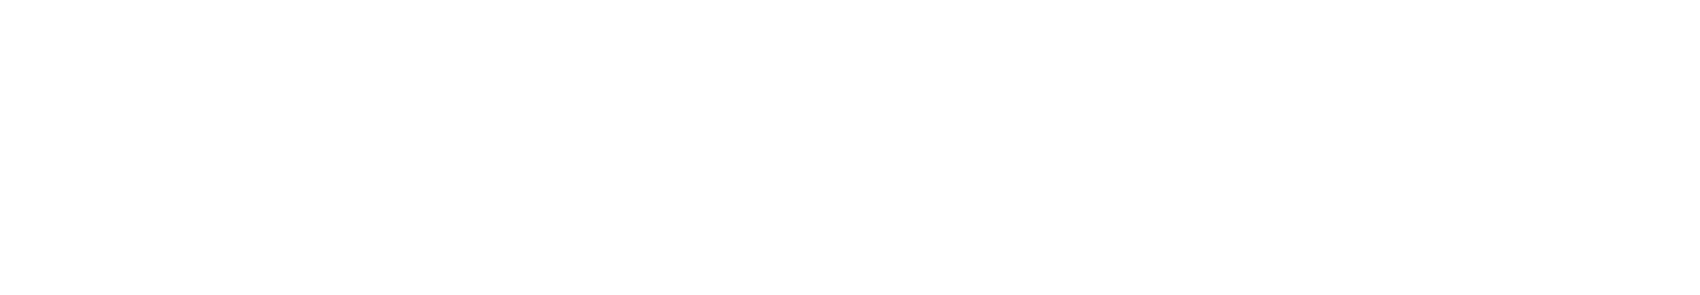 Lion Street Logo